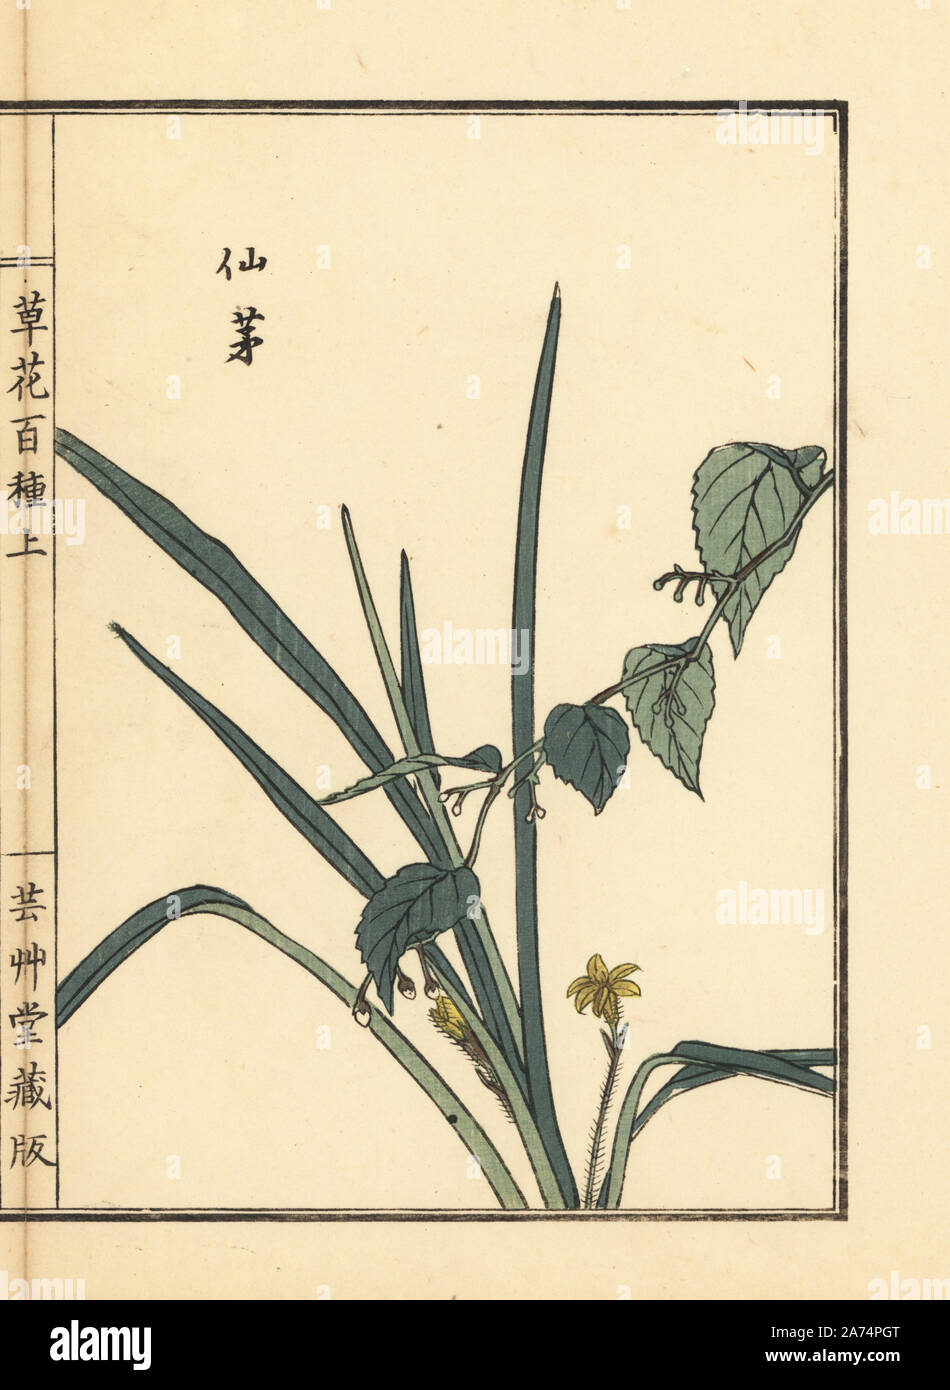 Kinbaizawa or golden-eye grass, Curculigo orchioides. Handcoloured woodblock print by Kono Bairei from Kusa Bana Hyakushu (One Hundred Varieties of Flowers), Tokyo, Yamada, 1901. Stock Photo